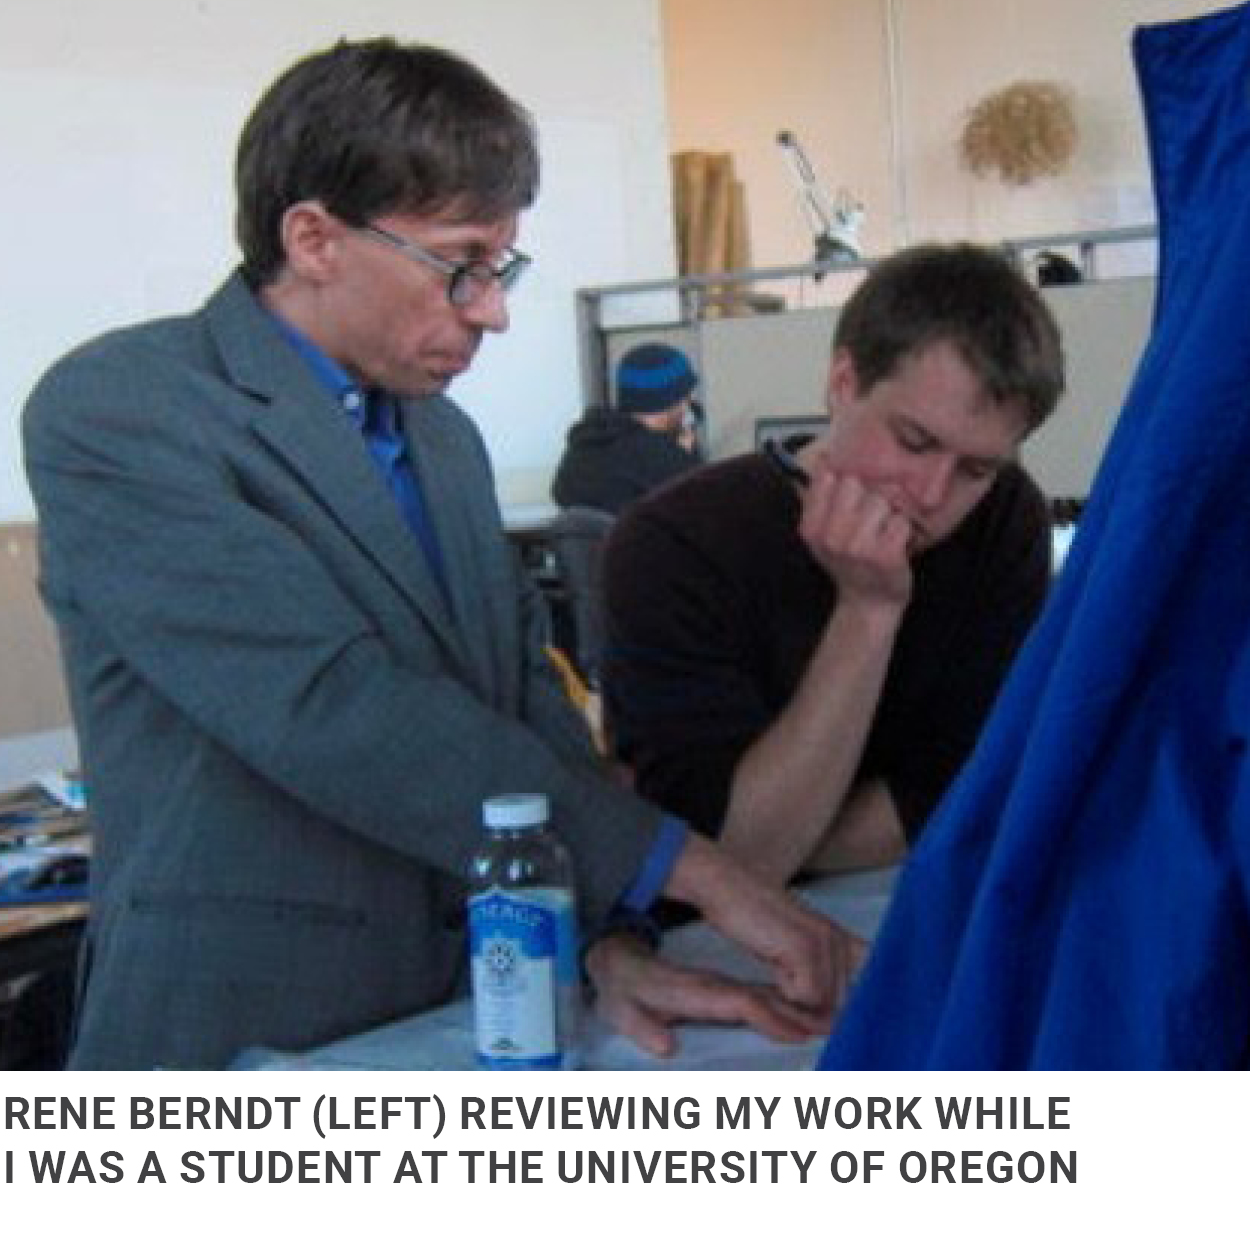 Rene Berndt reviews Bryan Hollar's work